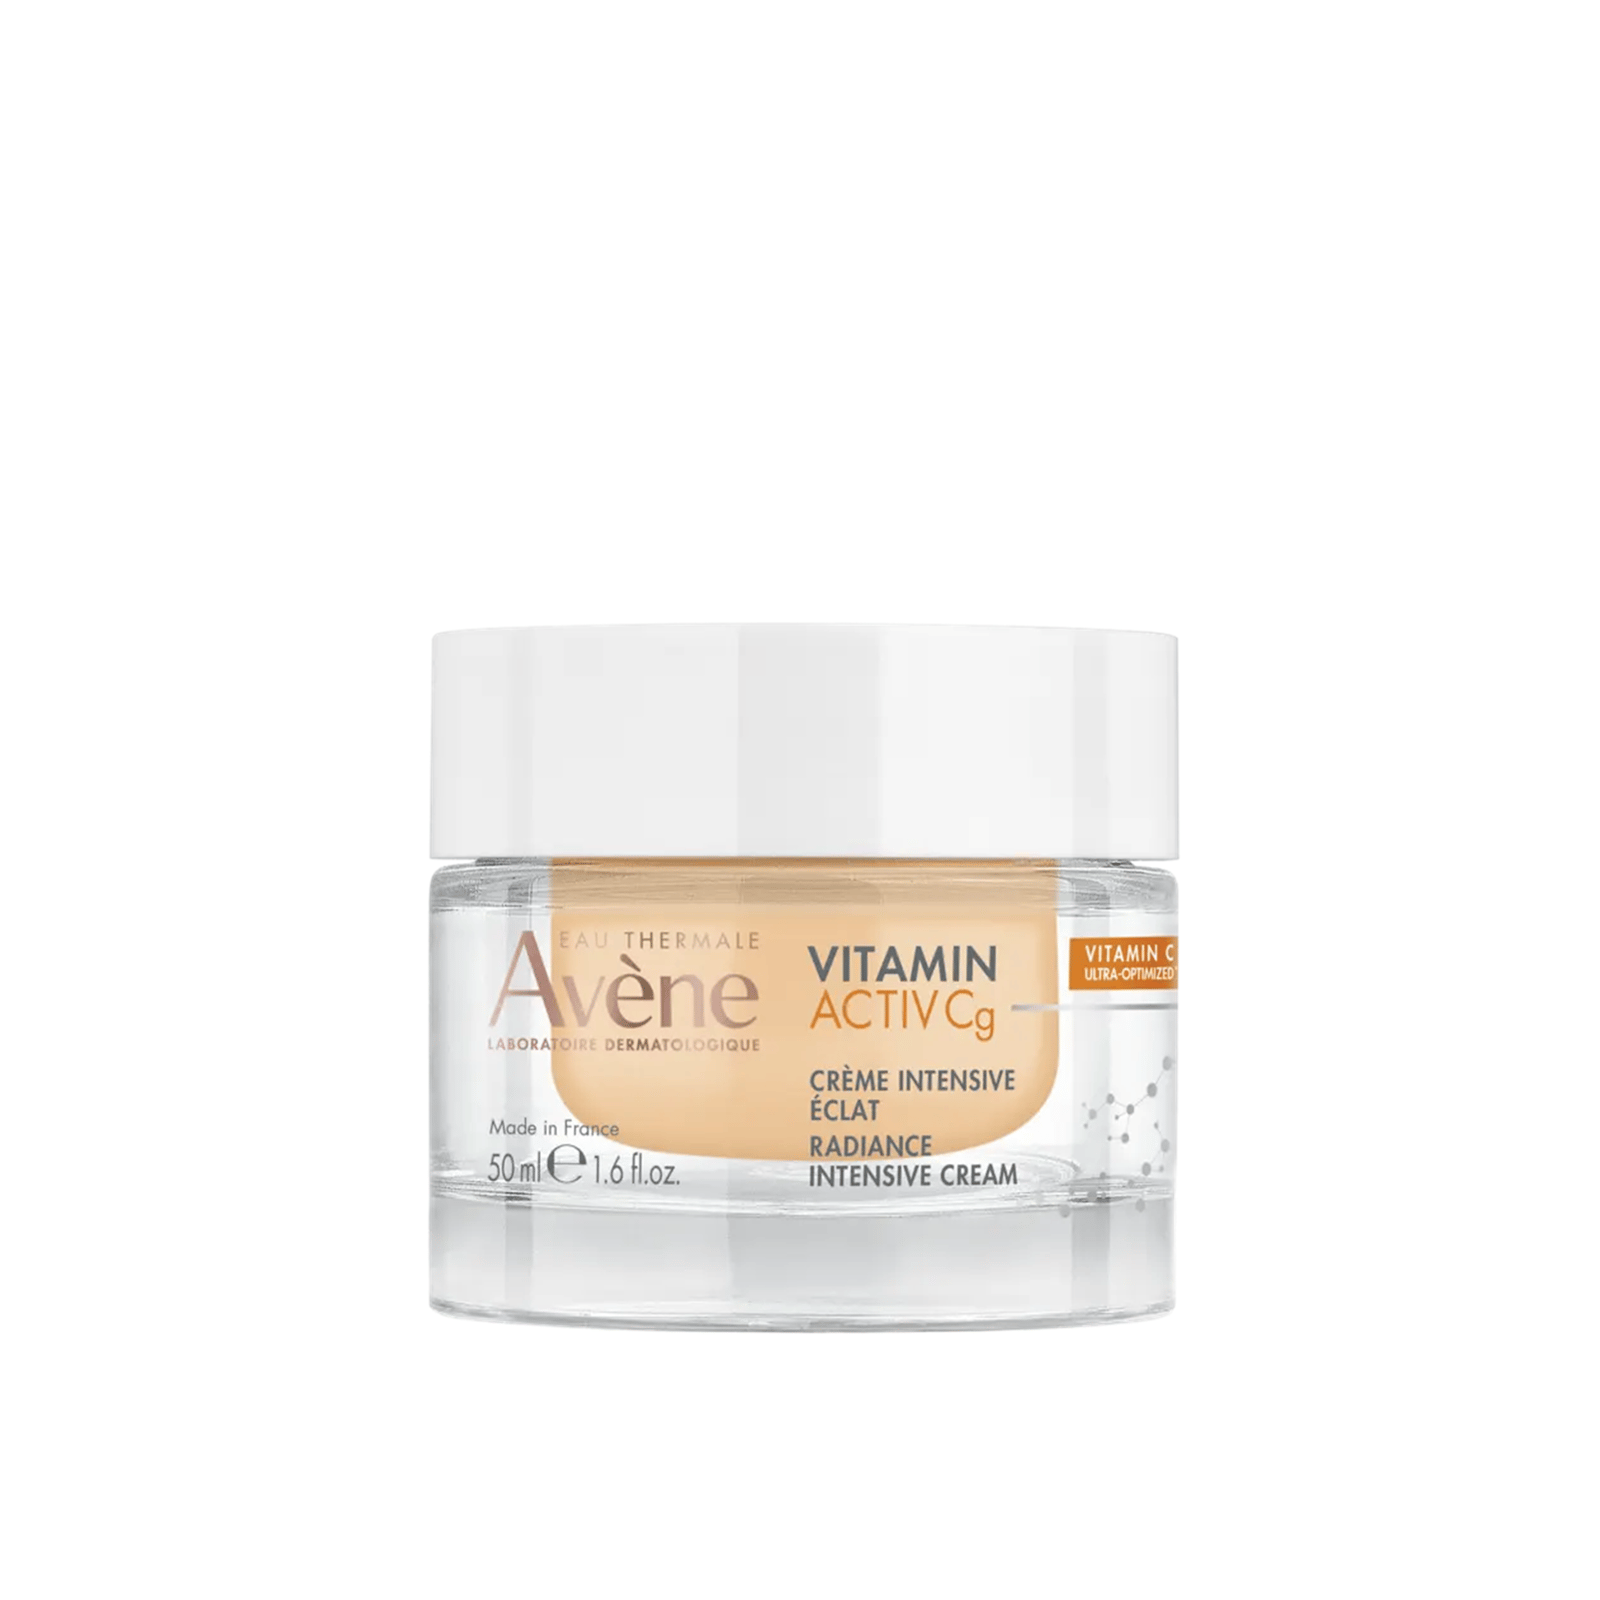 Avène Vitamin Activ Cg Intensive Radiance Cream 50ml (1.6floz)